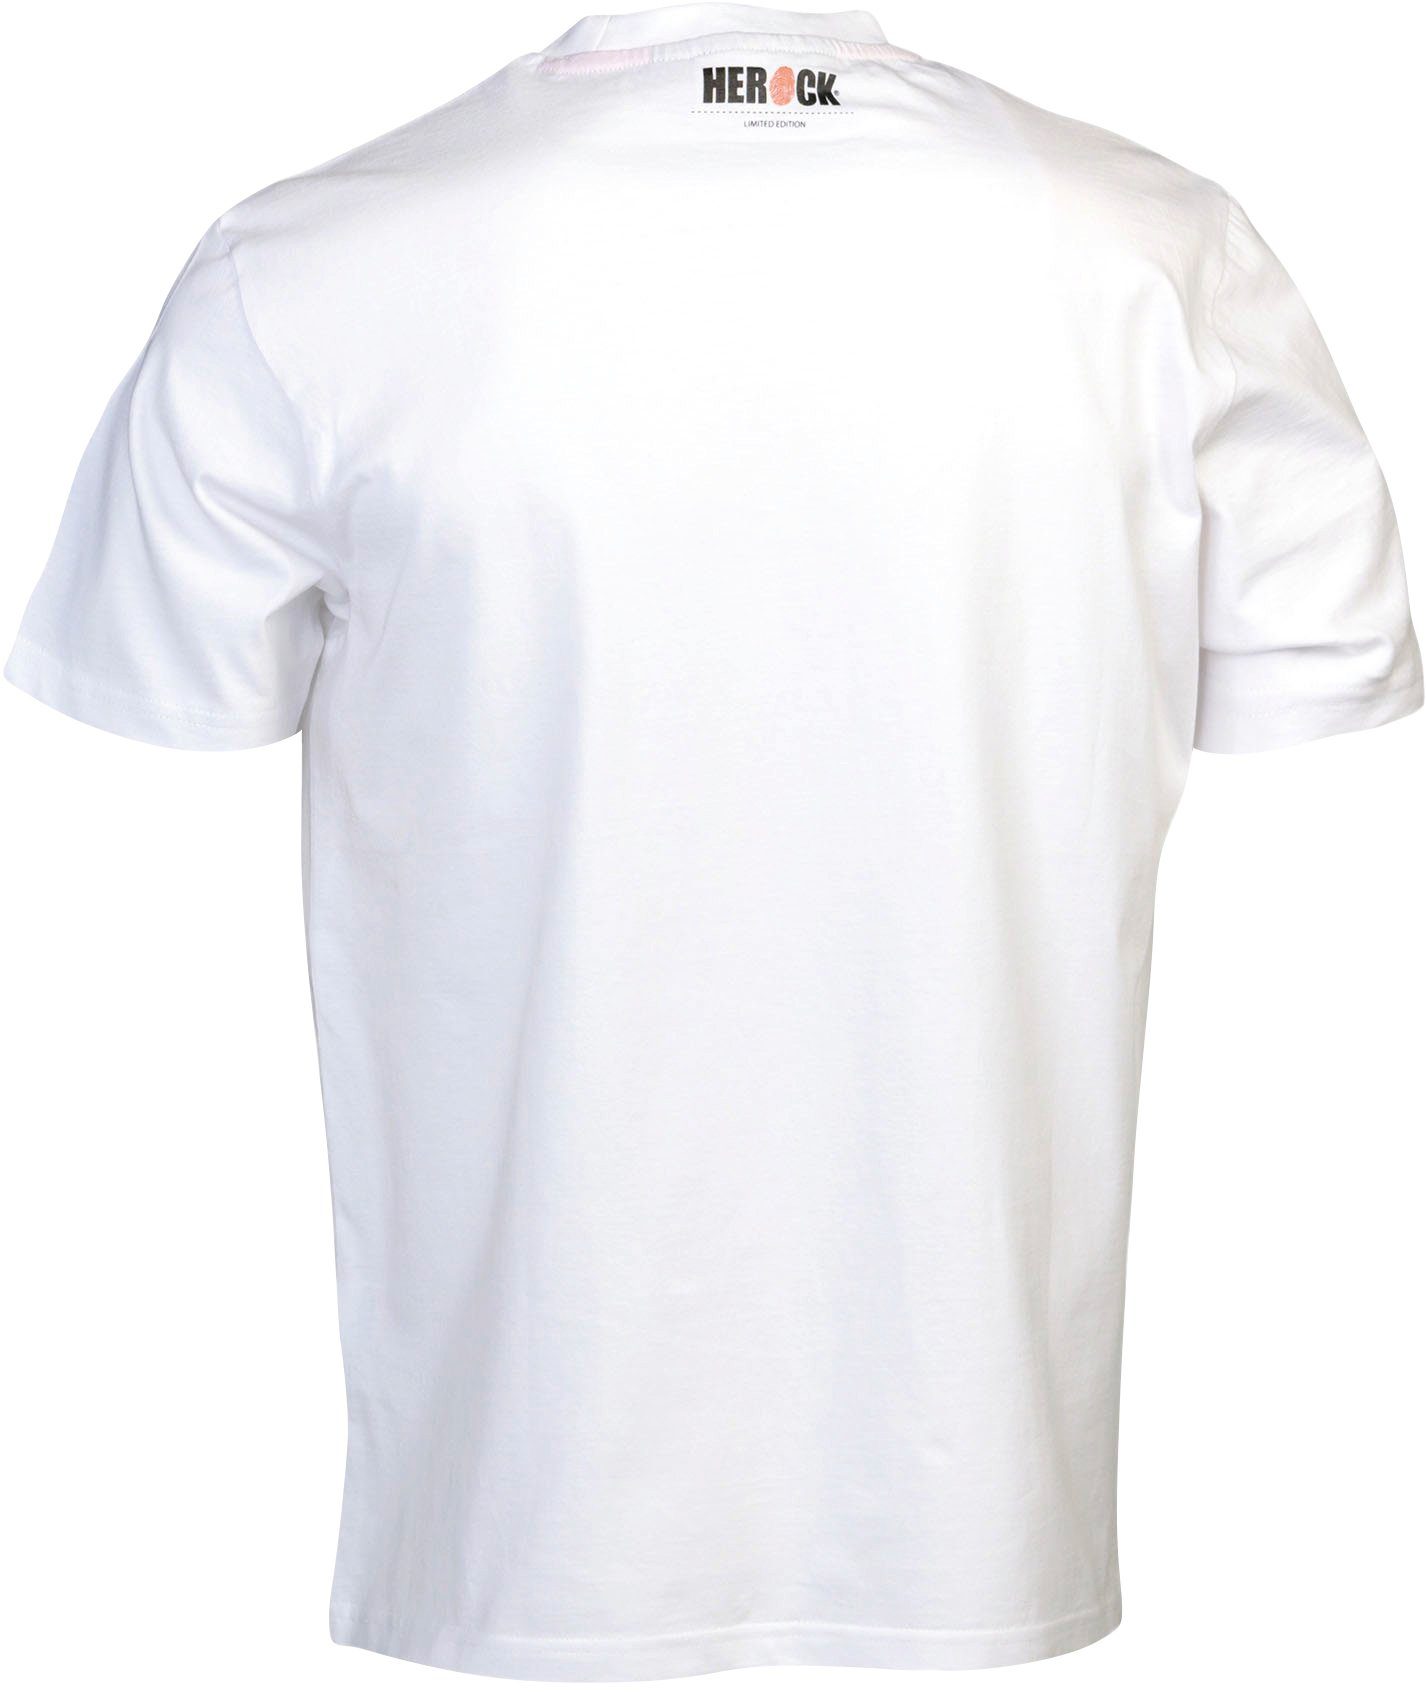 T-Shirt Herock Ärmeln, kurzen Burst Mit Herock®-Aufdruck Rundhalsausschnitt,